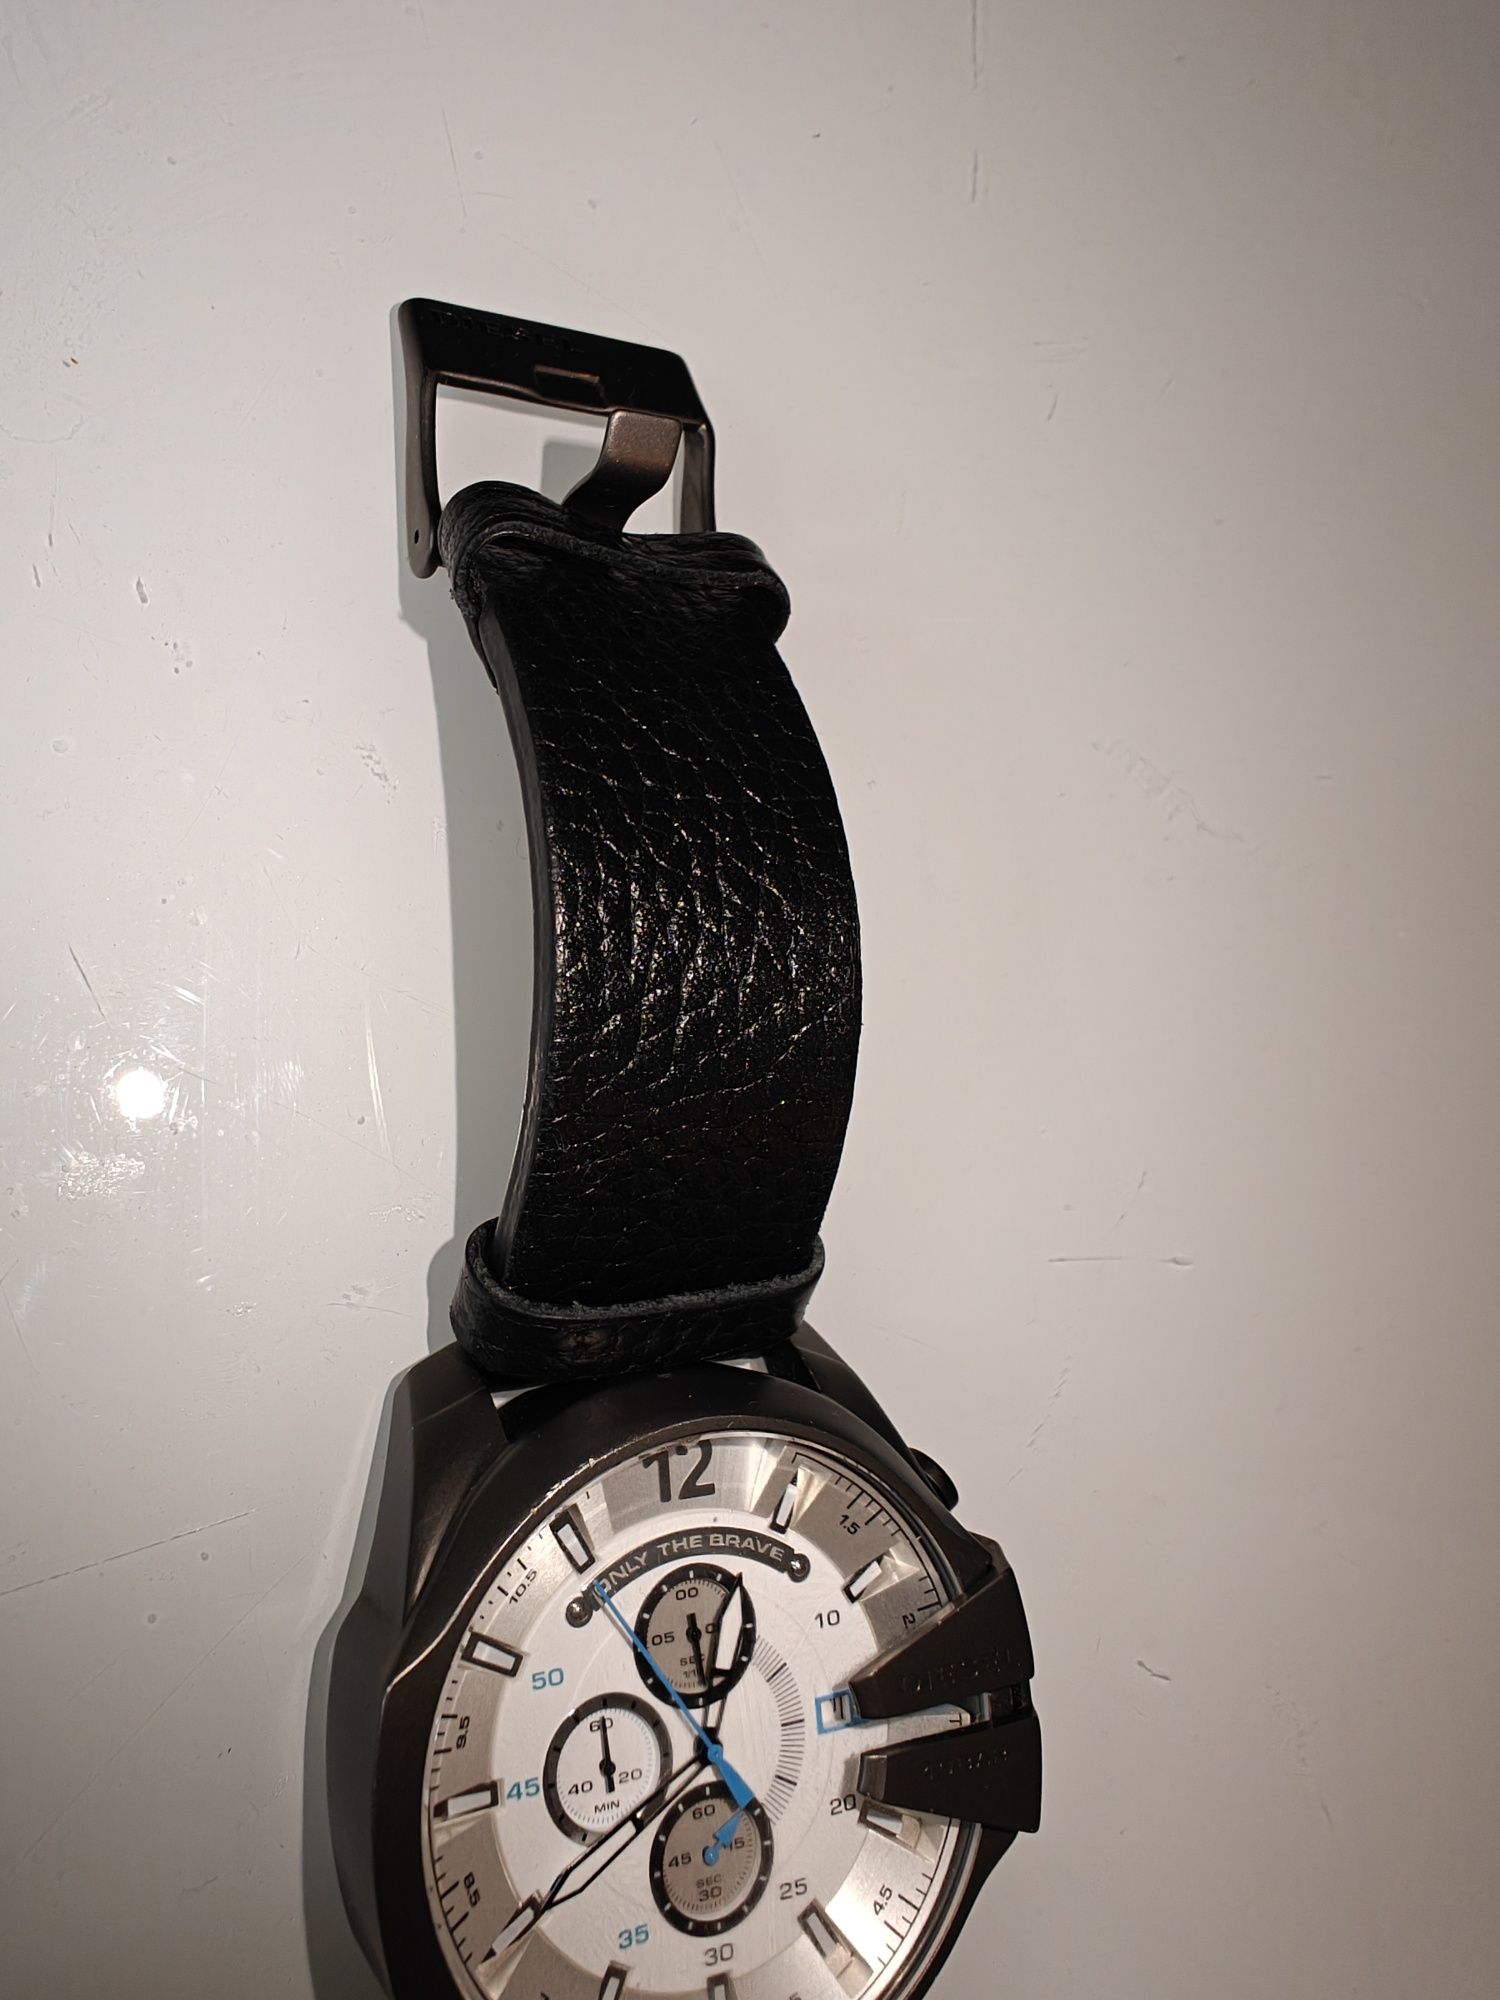 Zegarek Diesel DZ 4280 czarny pasek skóra ori